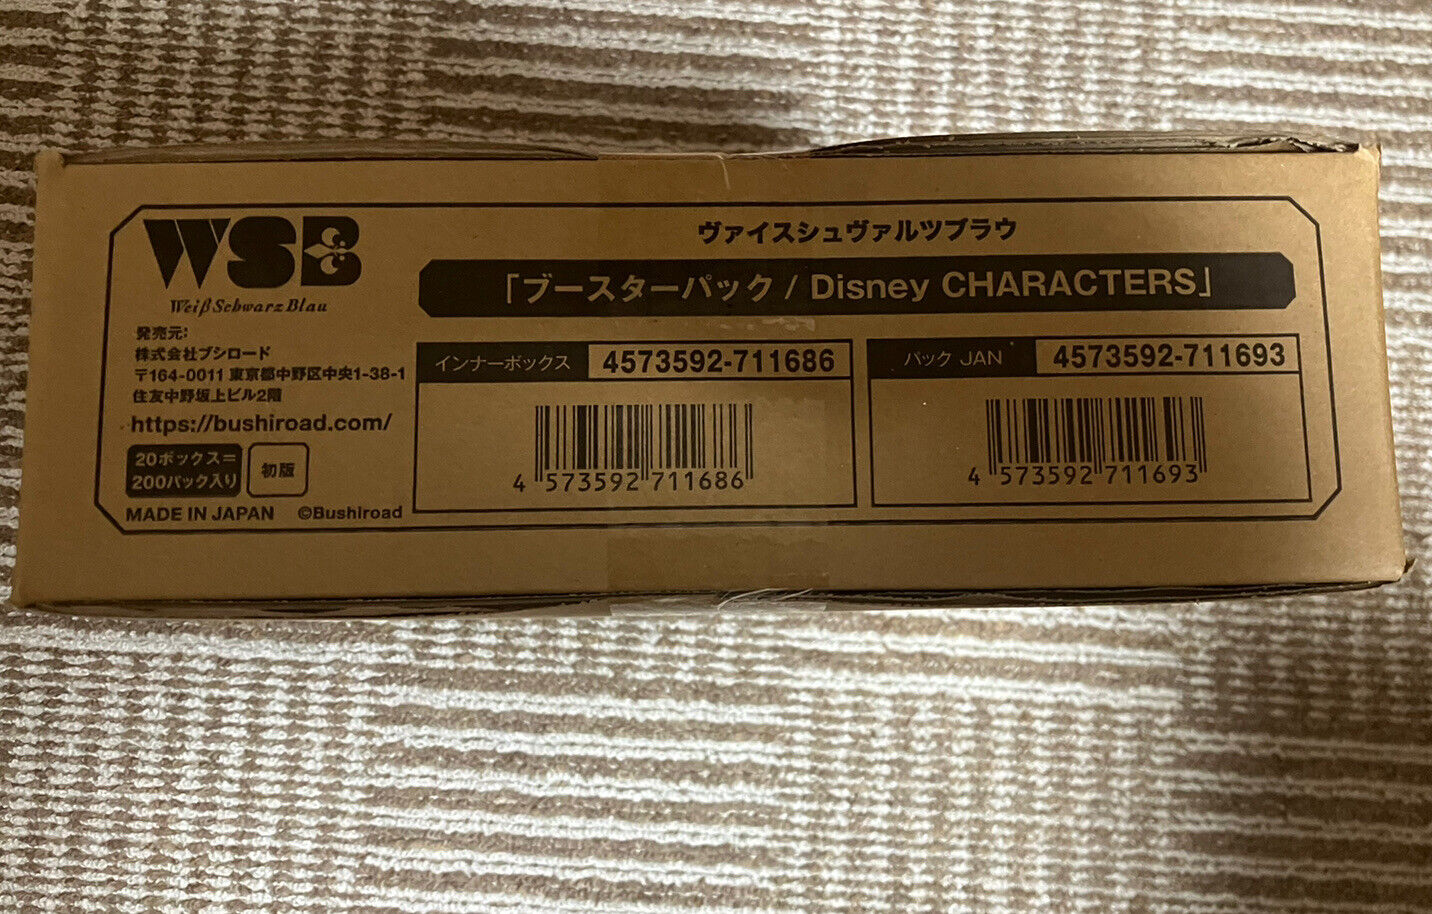 Case(20 Booster Box)Weiss Schwarz Blau Disney Characters  FedEx IP Free Shipping